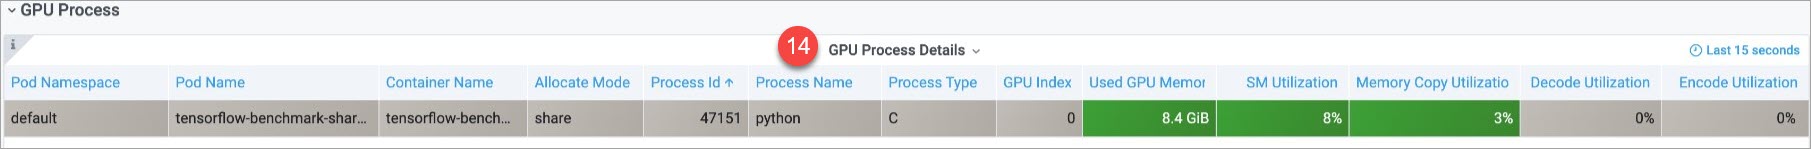 GPU Process